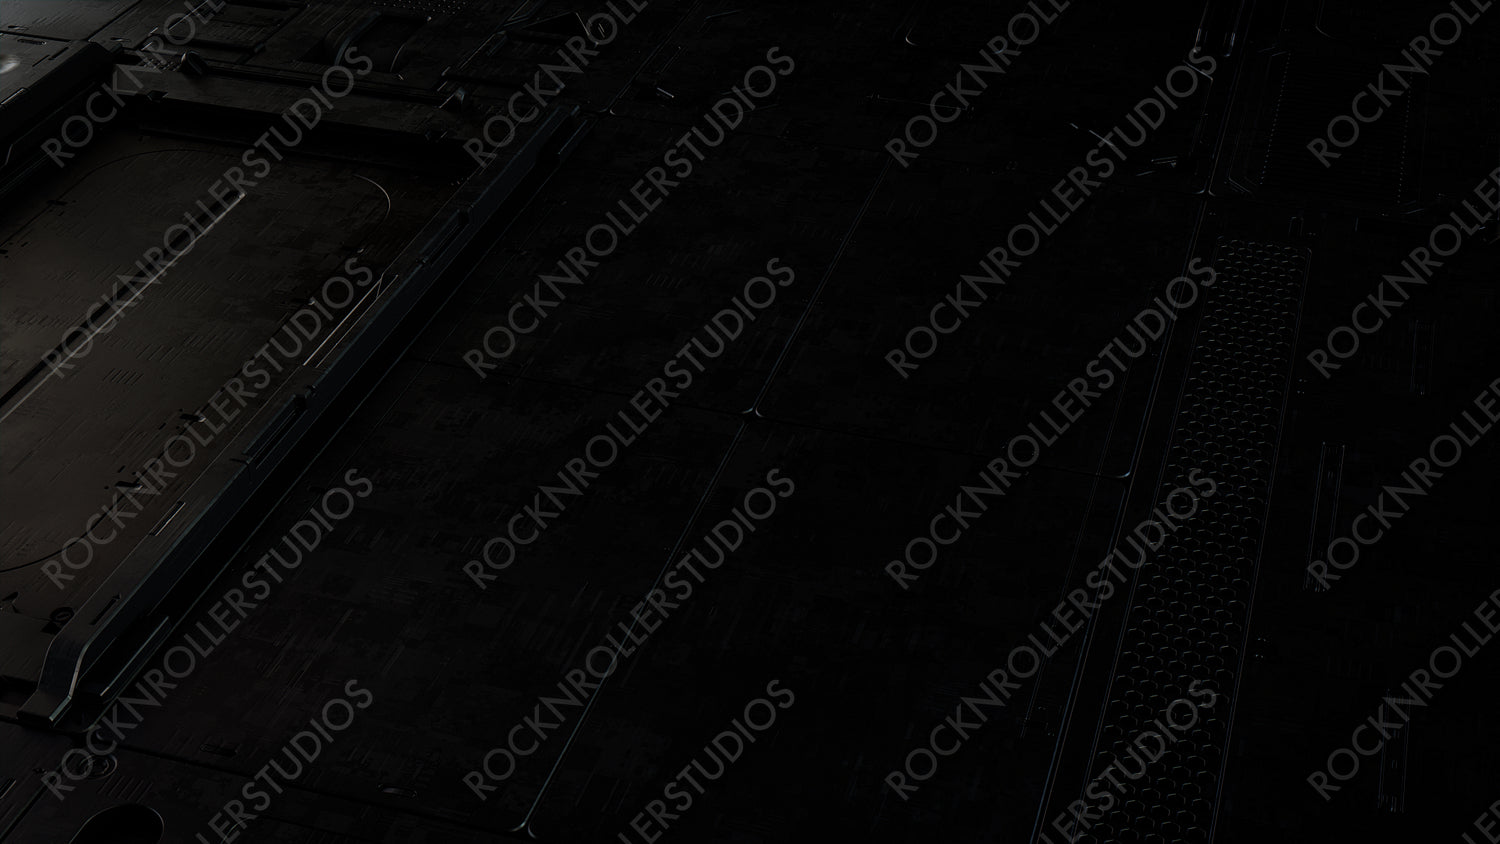 Black, Tech Background with Futuristic 3D Panels. Dark, Sci-Fi style. 3D Render.